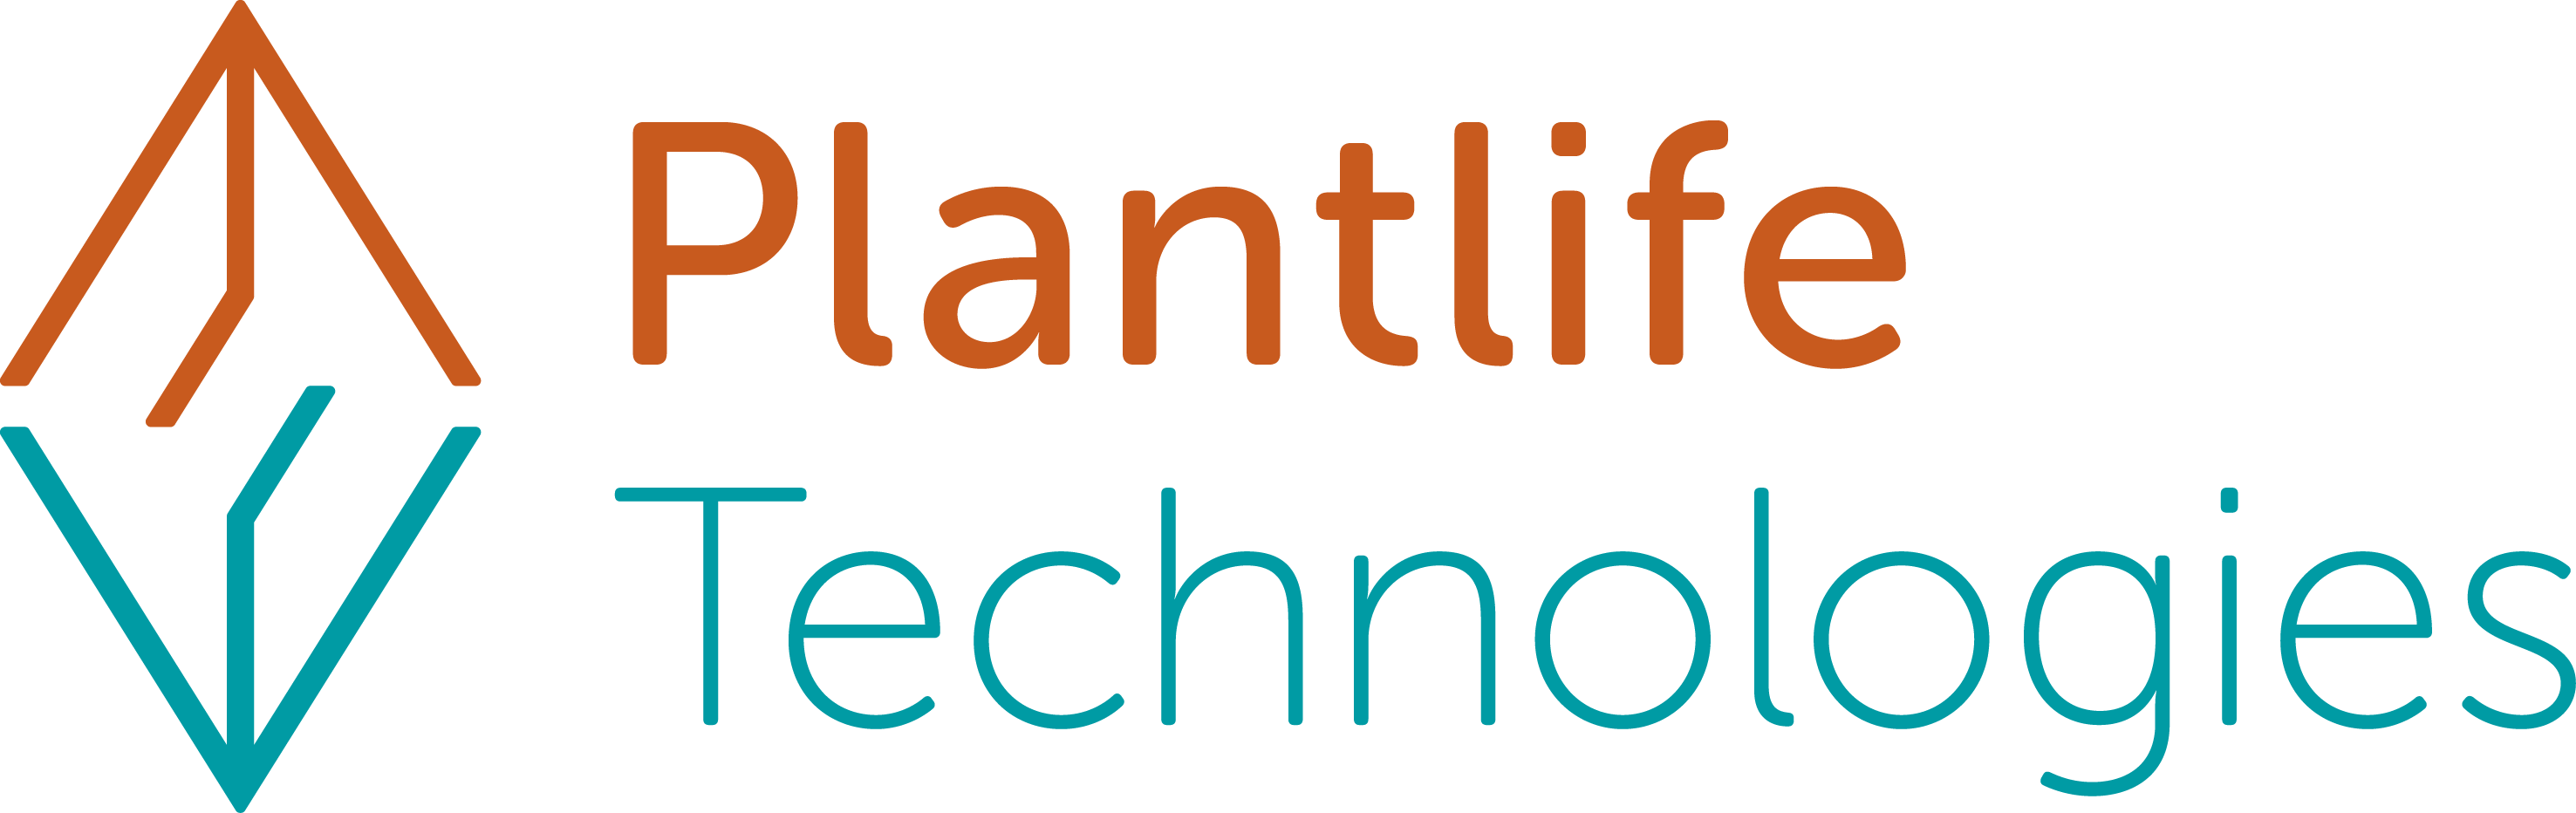 Plantlife - Technologies